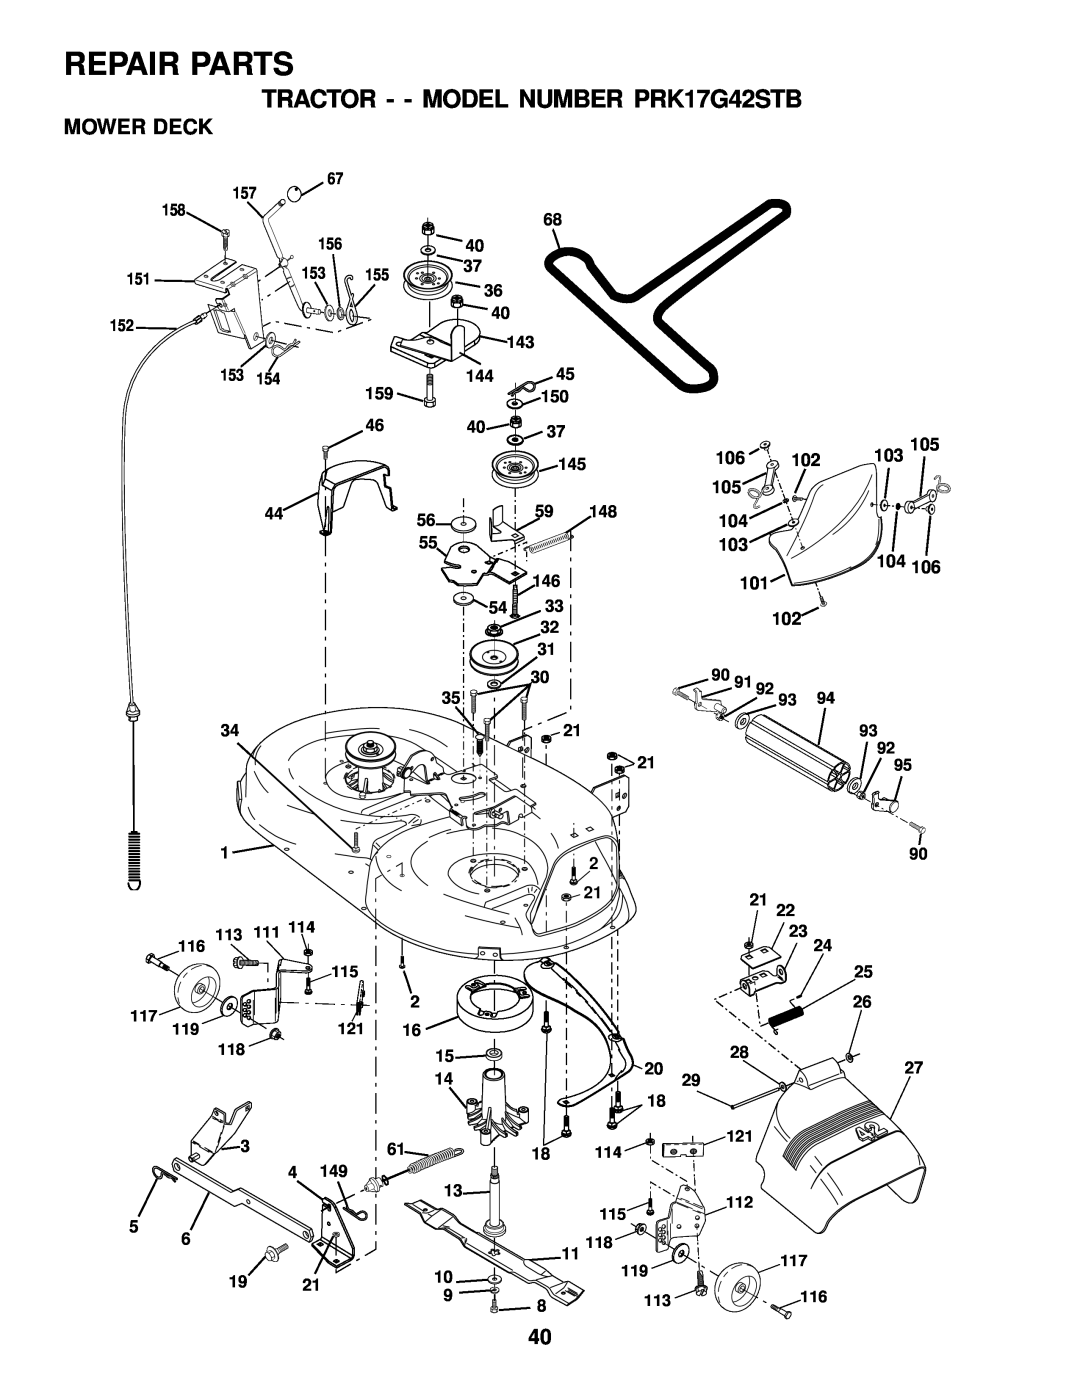 Poulan 178108 owner manual Mower Deck, Repair Parts, TRACTOR - - MODEL NUMBER PRK17G42STB 